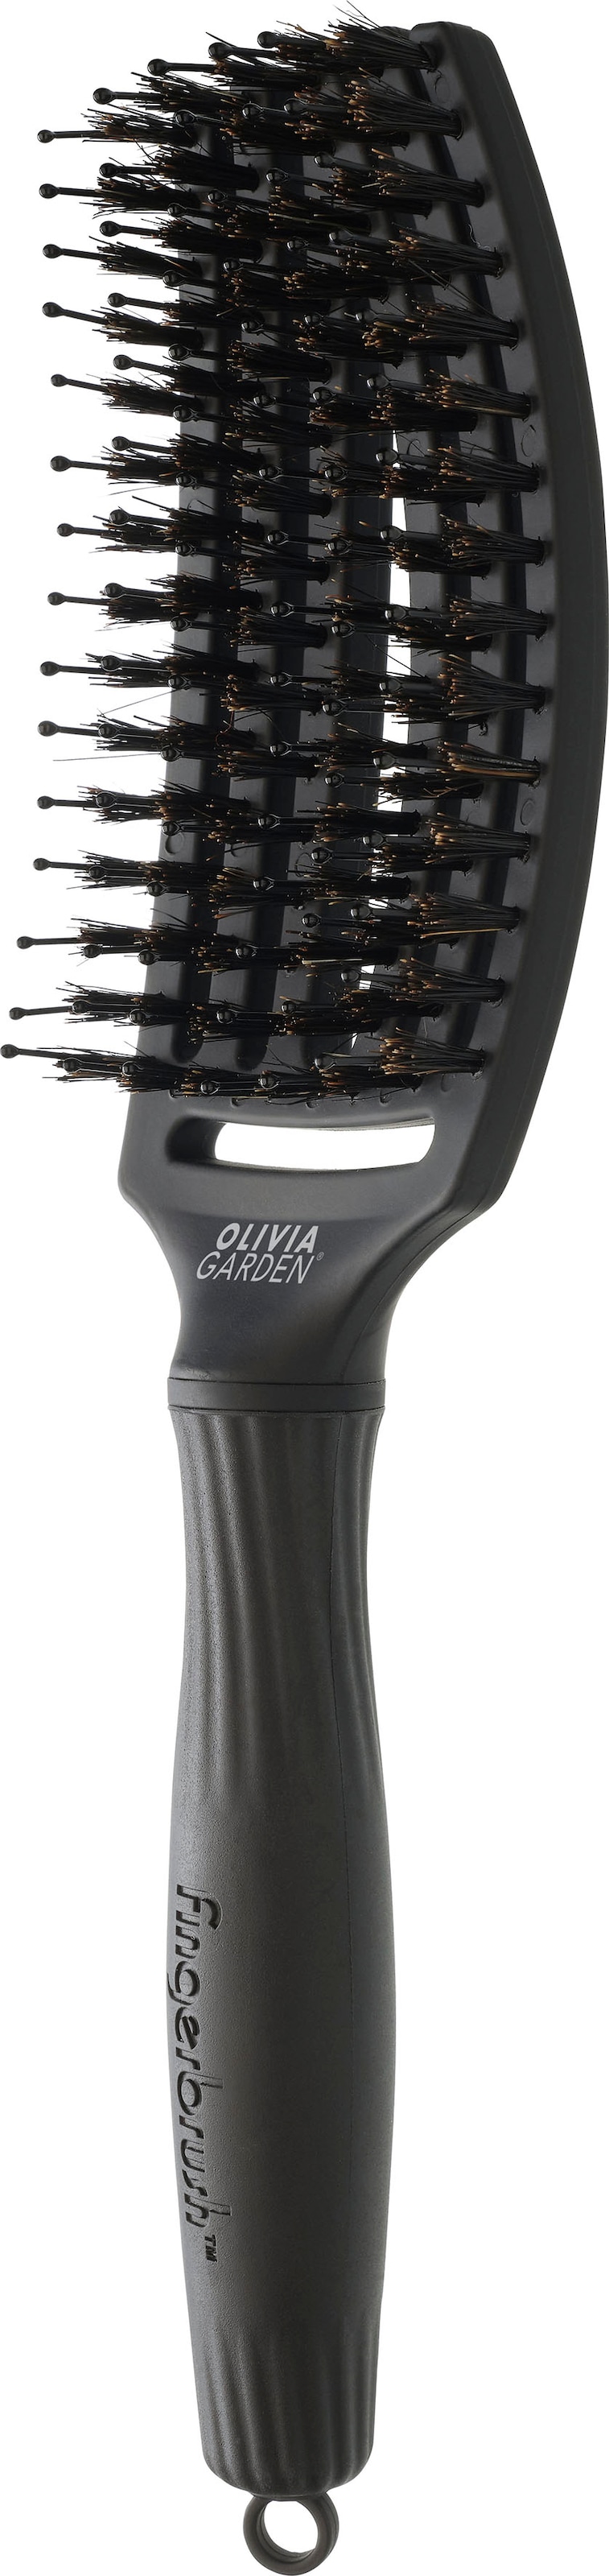 OLIVIA GARDEN Haarbürste mit Garantie Jahren 3 »Fingerbrush Combo Medium« XXL